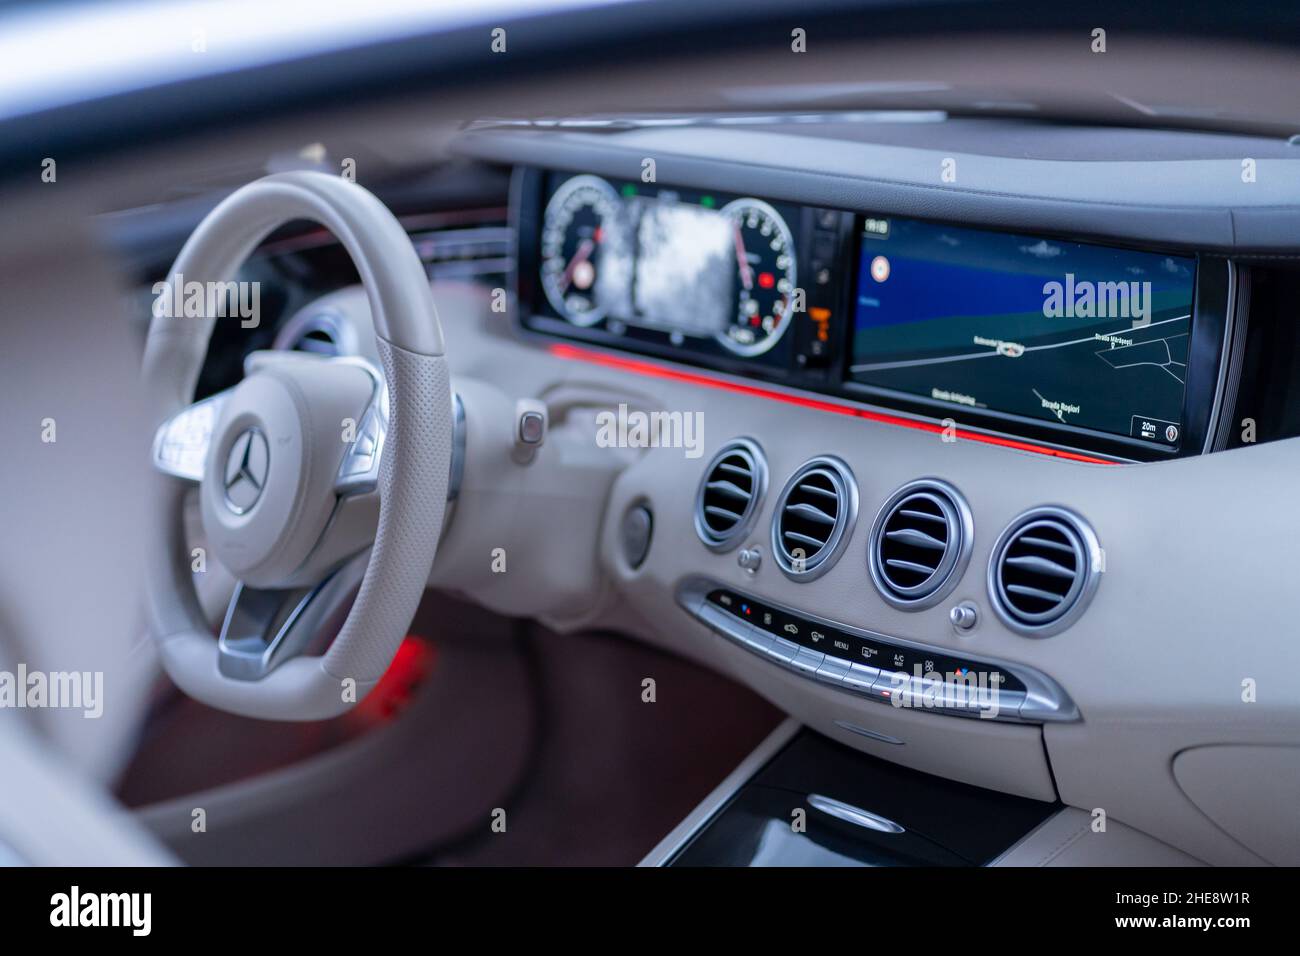 Galati, Romania - September 15, 2021: Mercedes S500 Coupe Stock Photo